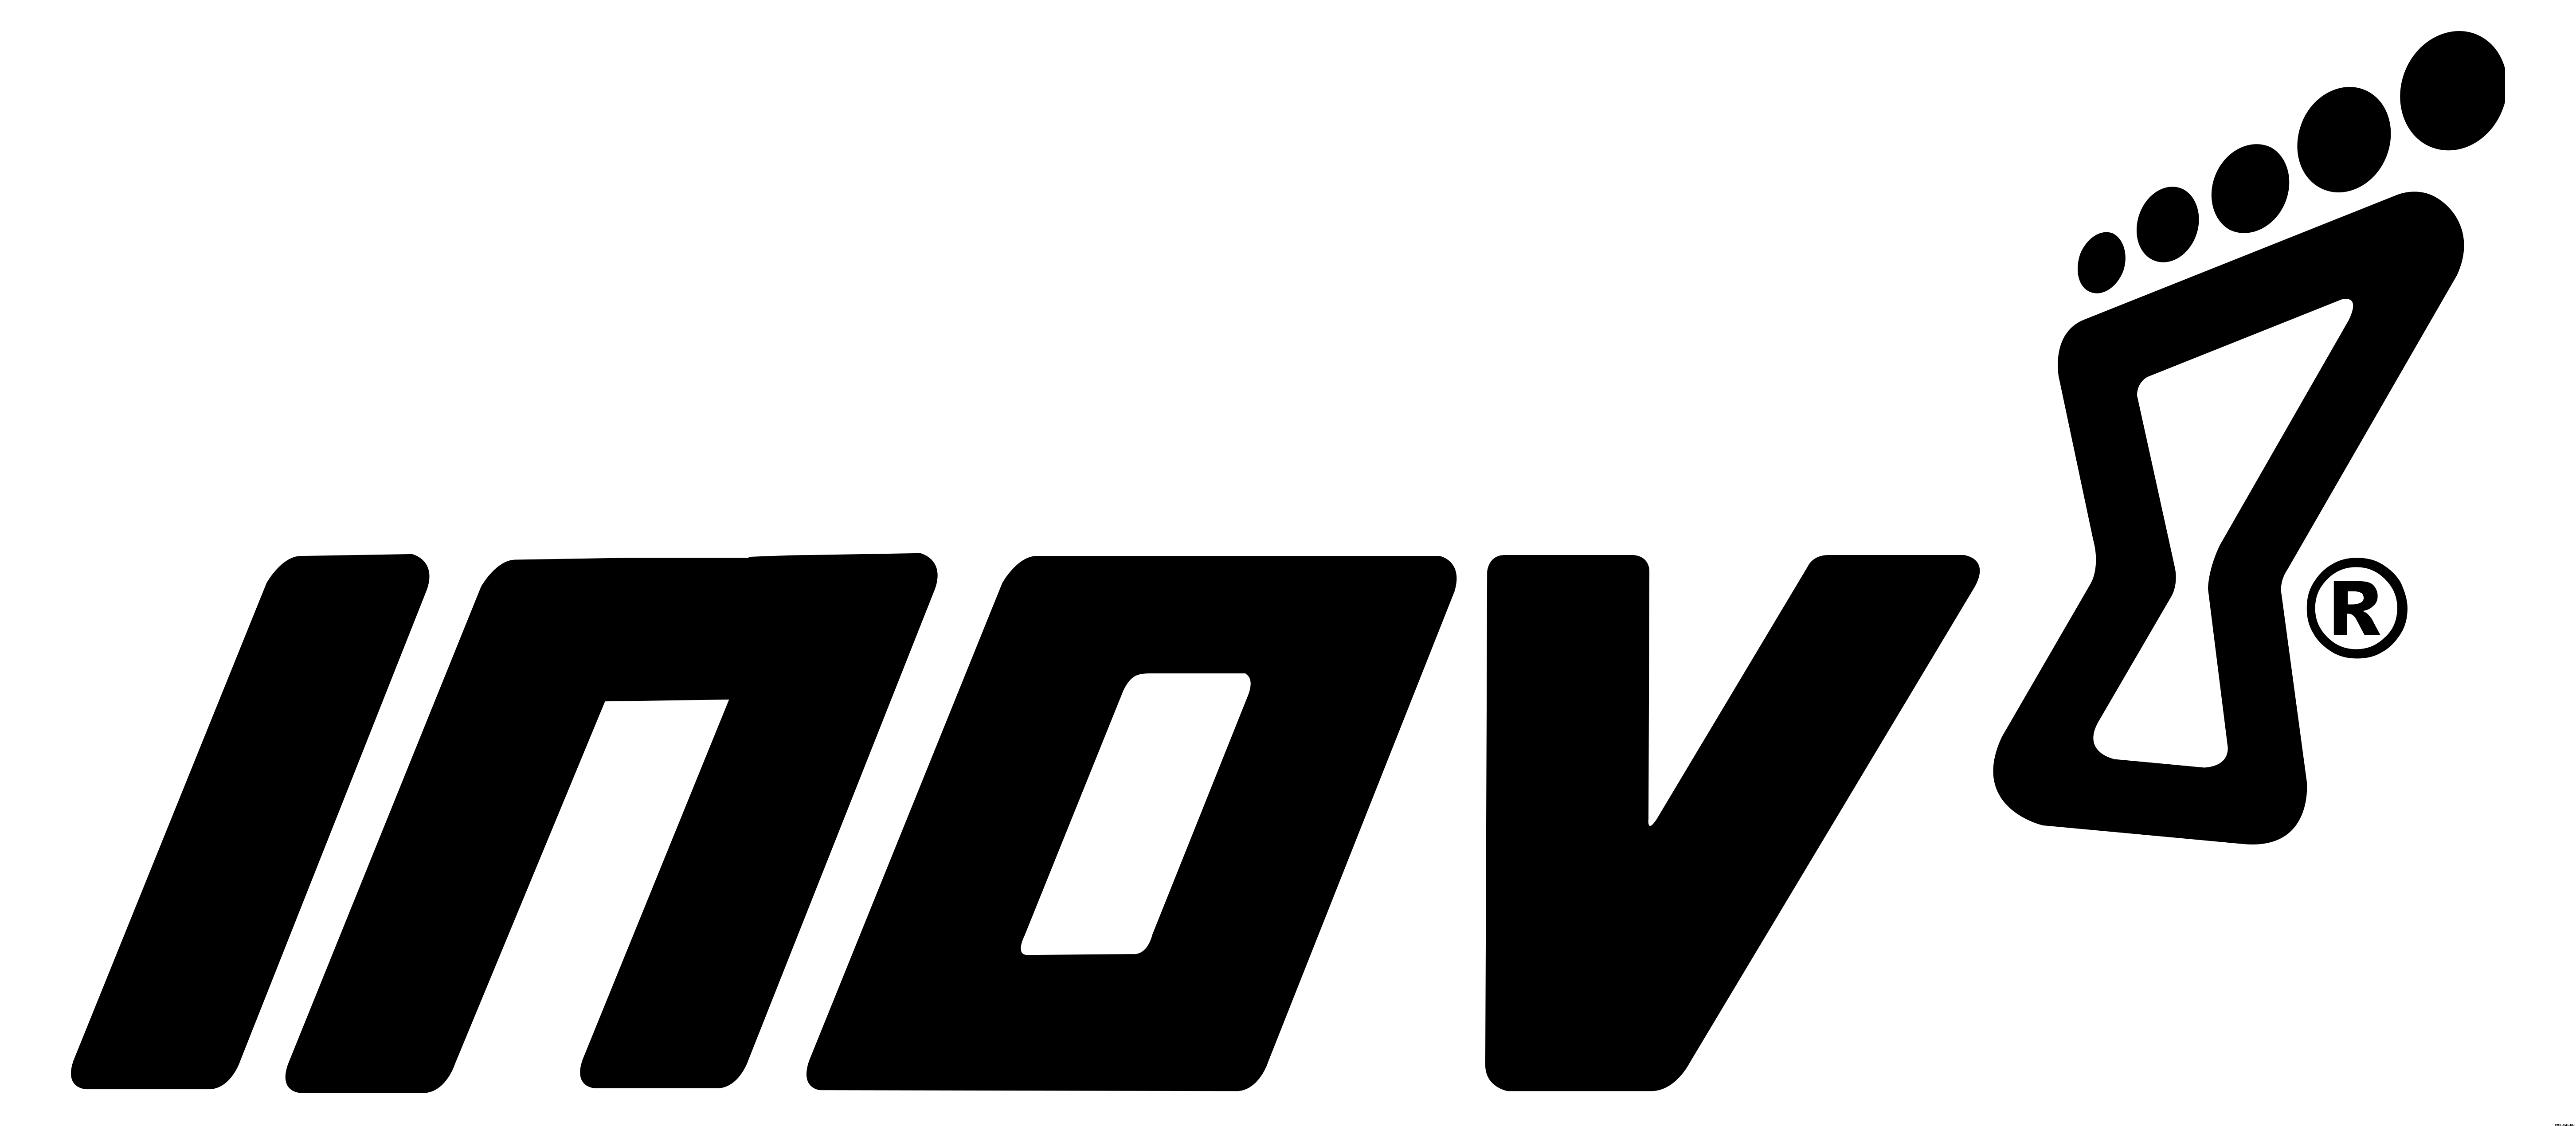 Inov-8 Logo - Inov-8 | Varuste.net English